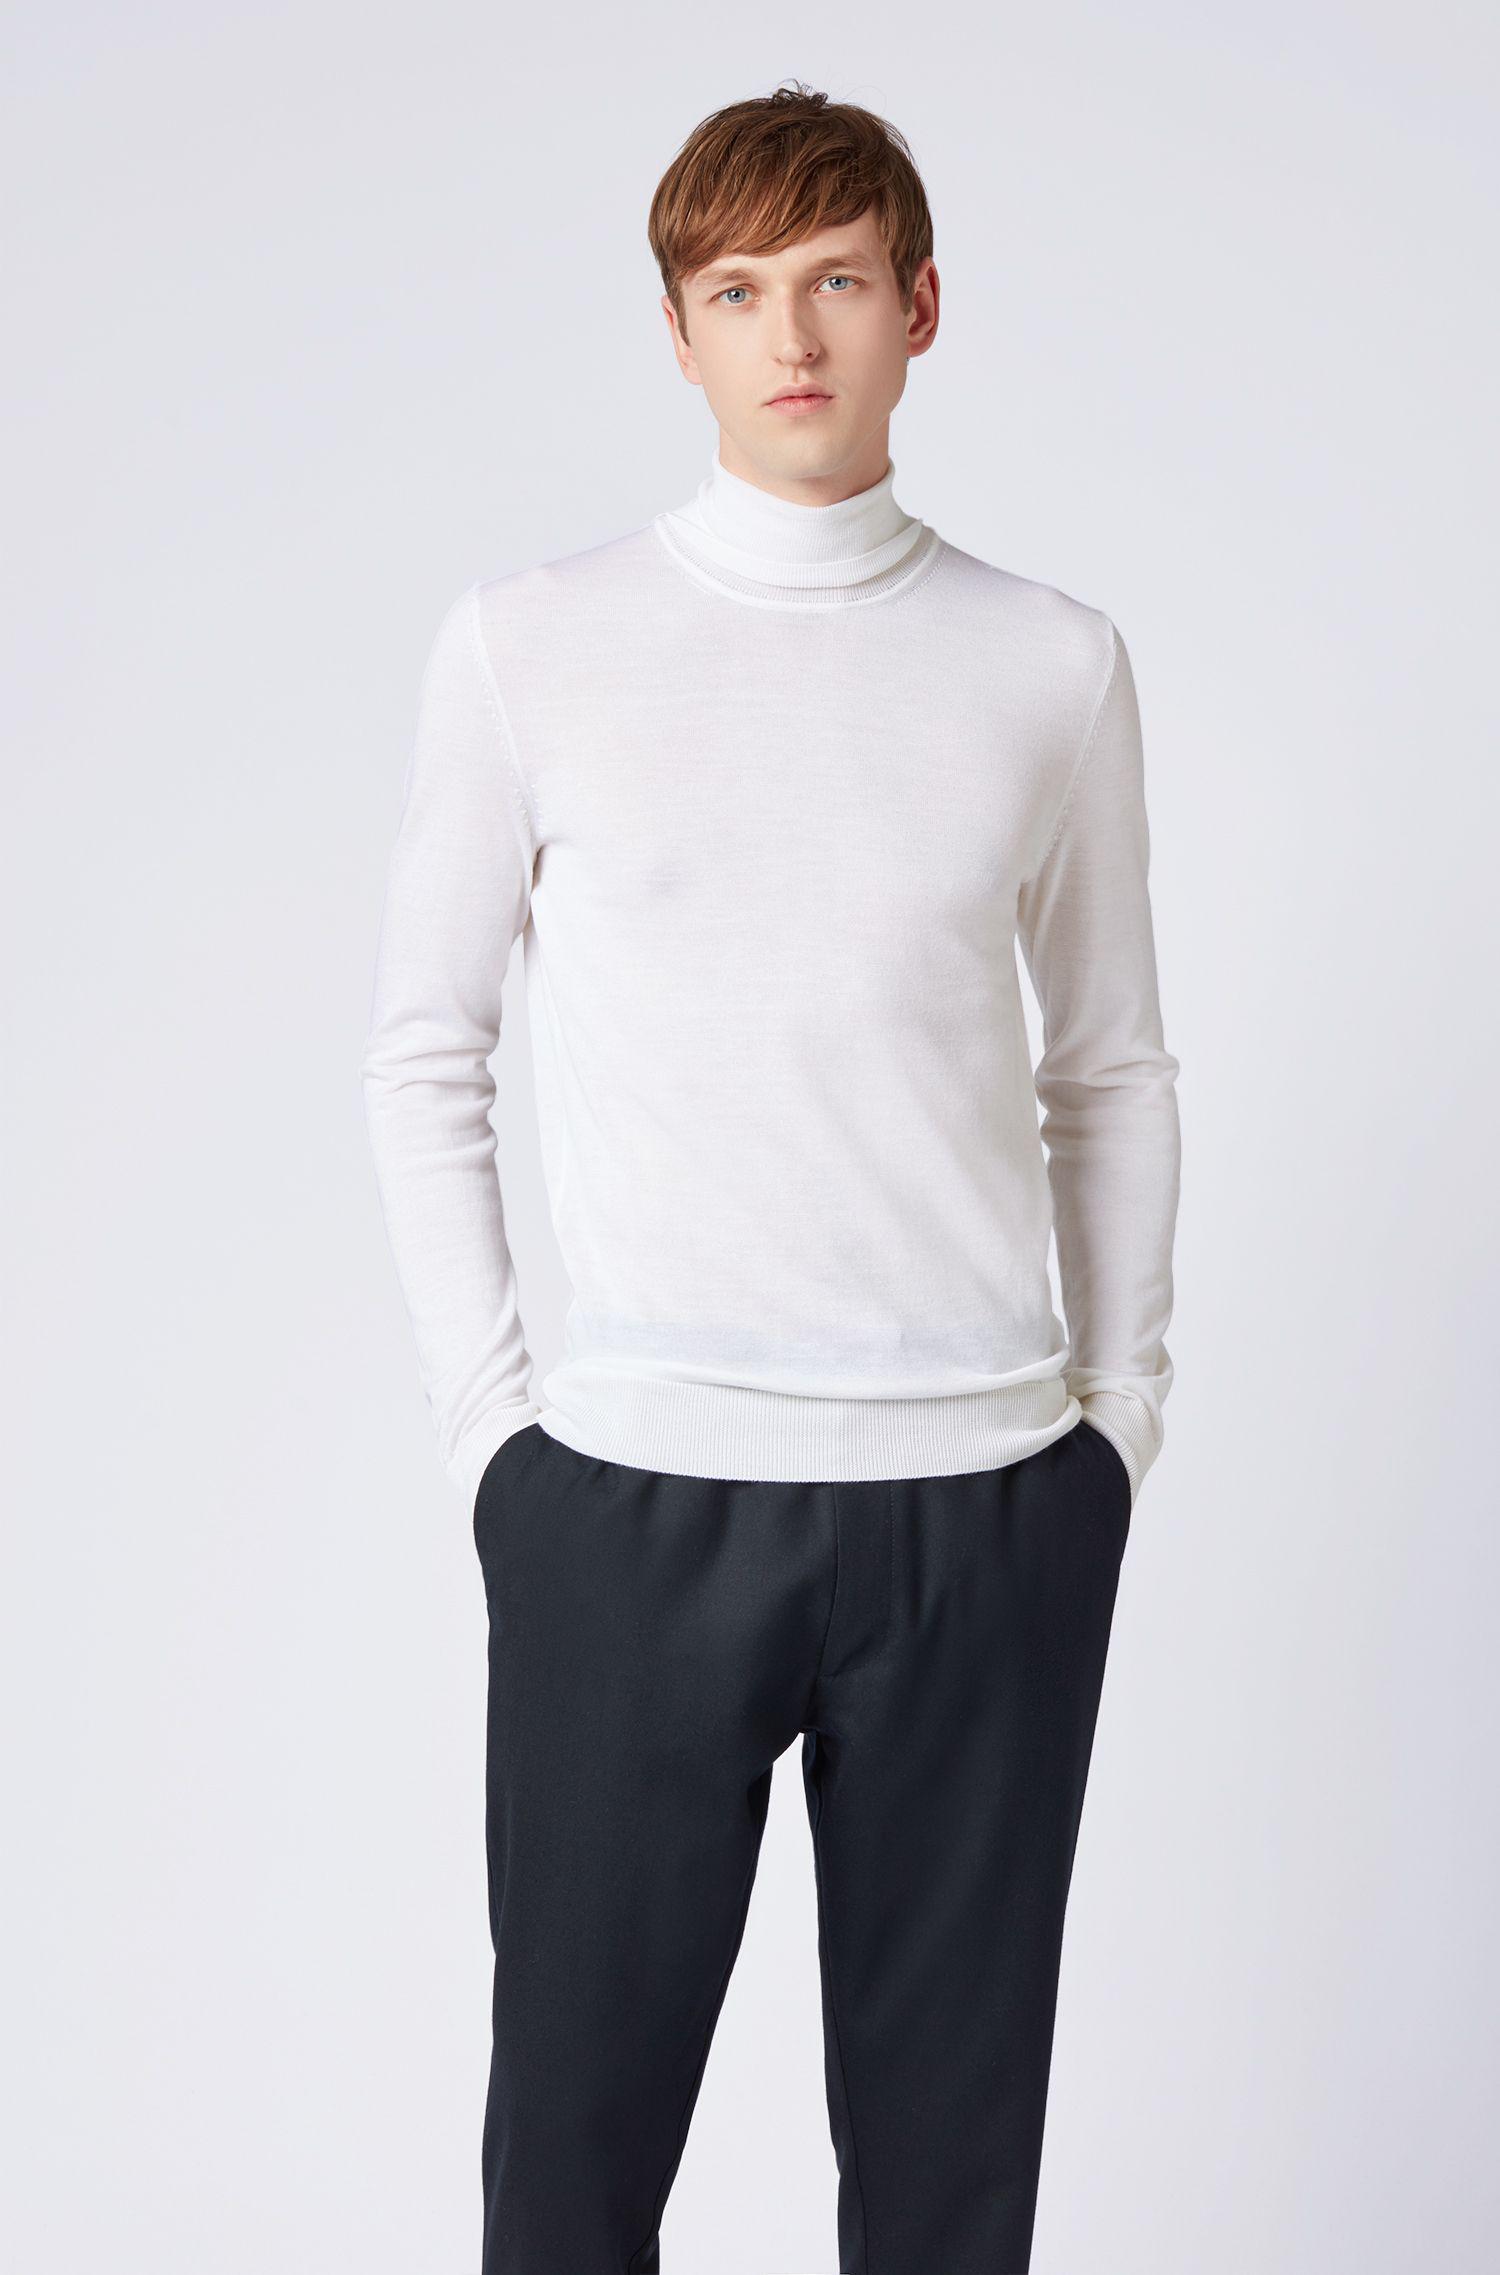 BOSS Turtleneck Sweater In Virgin Wool And Silk in White for Men - Lyst